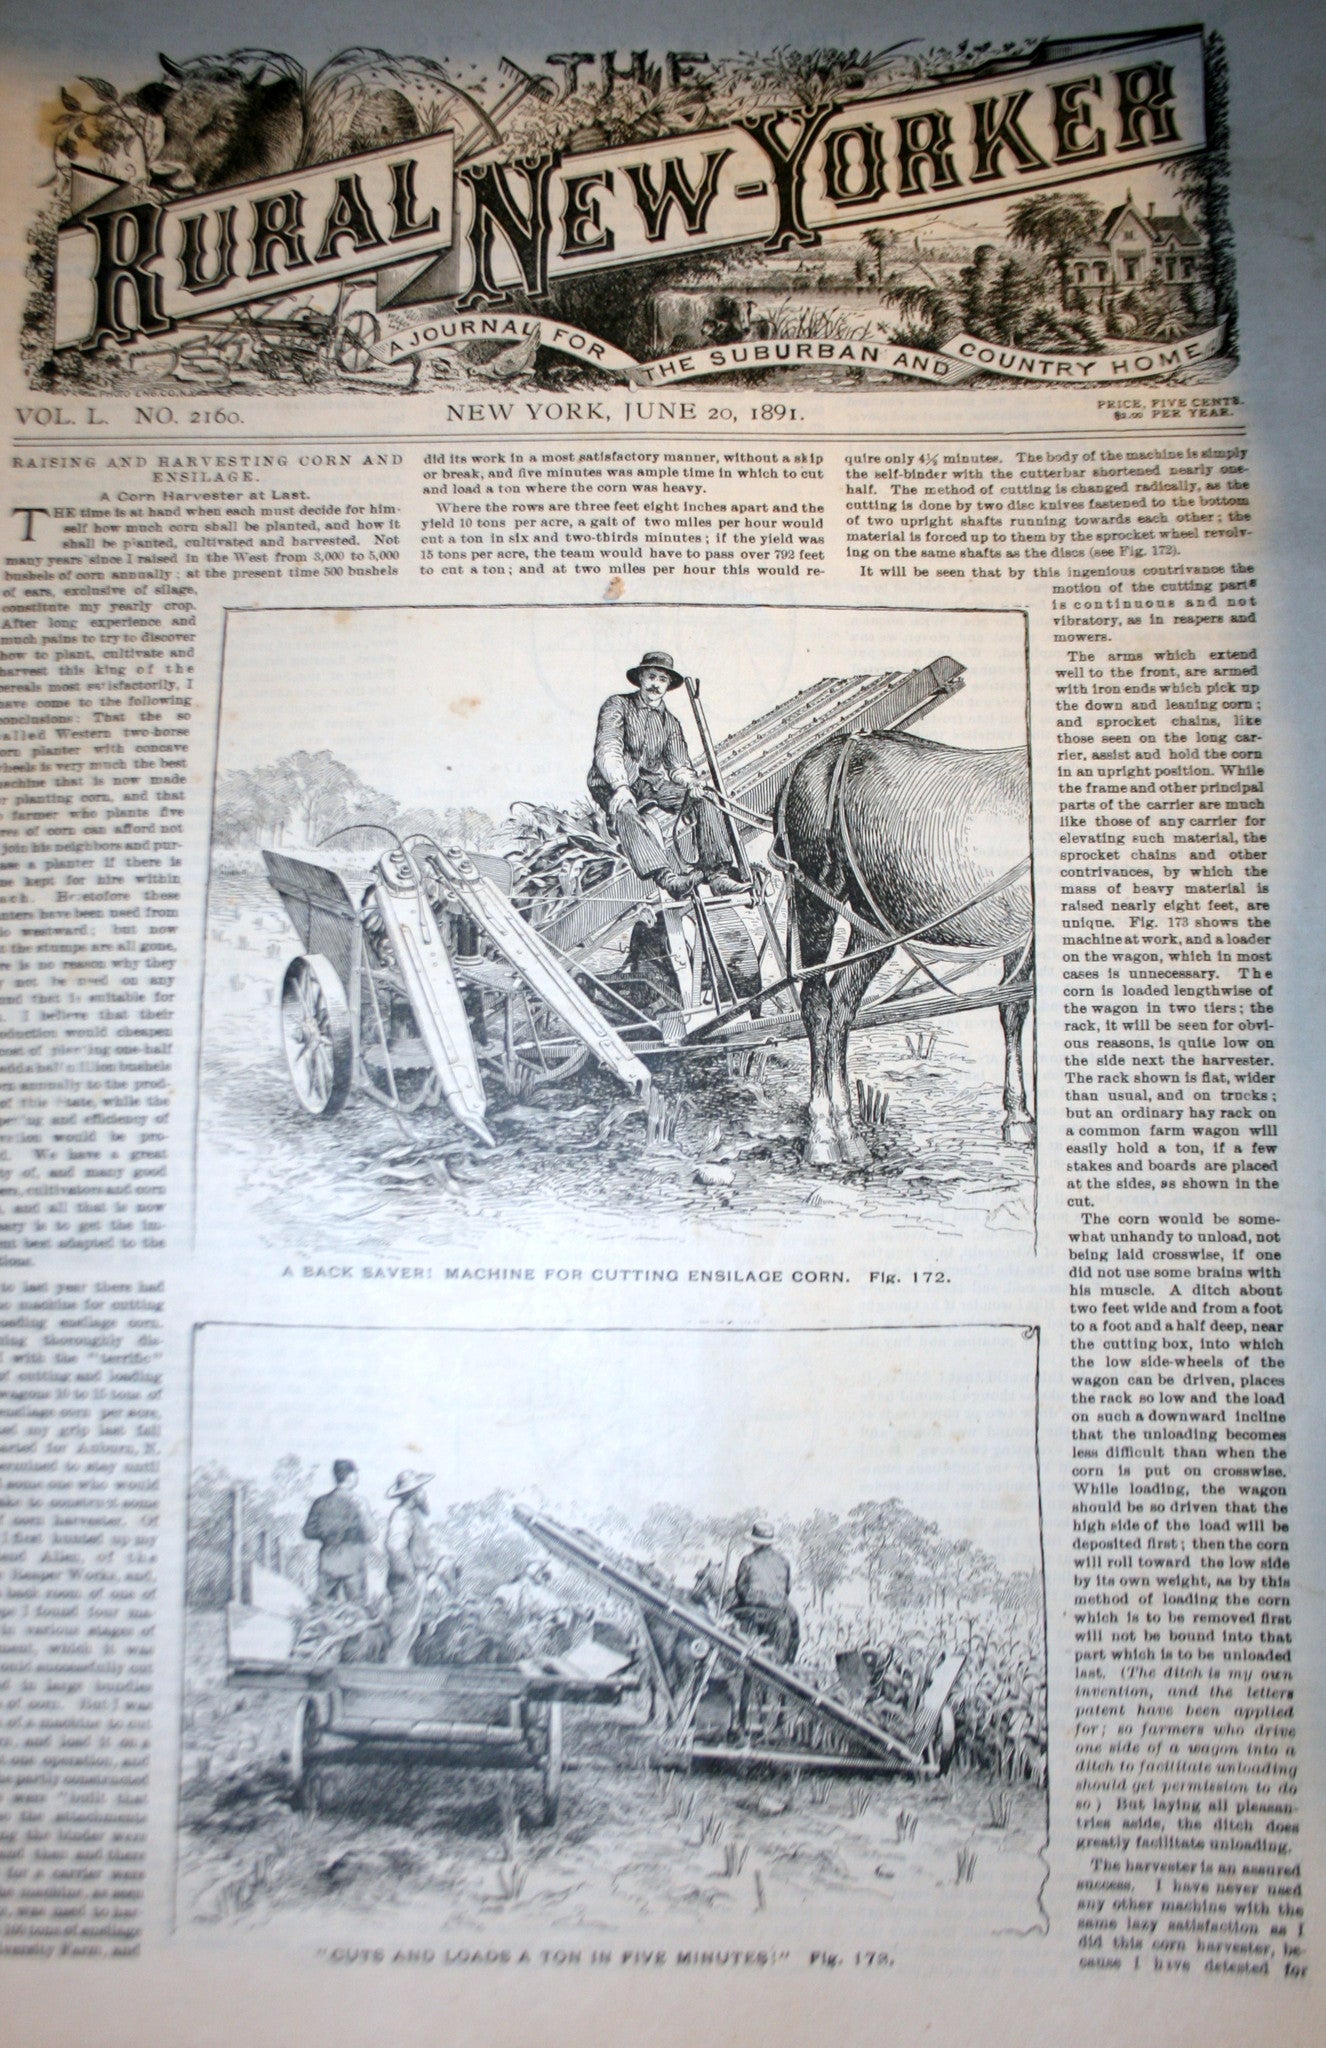 1891.06.20  NEWS Rural - New Yorker